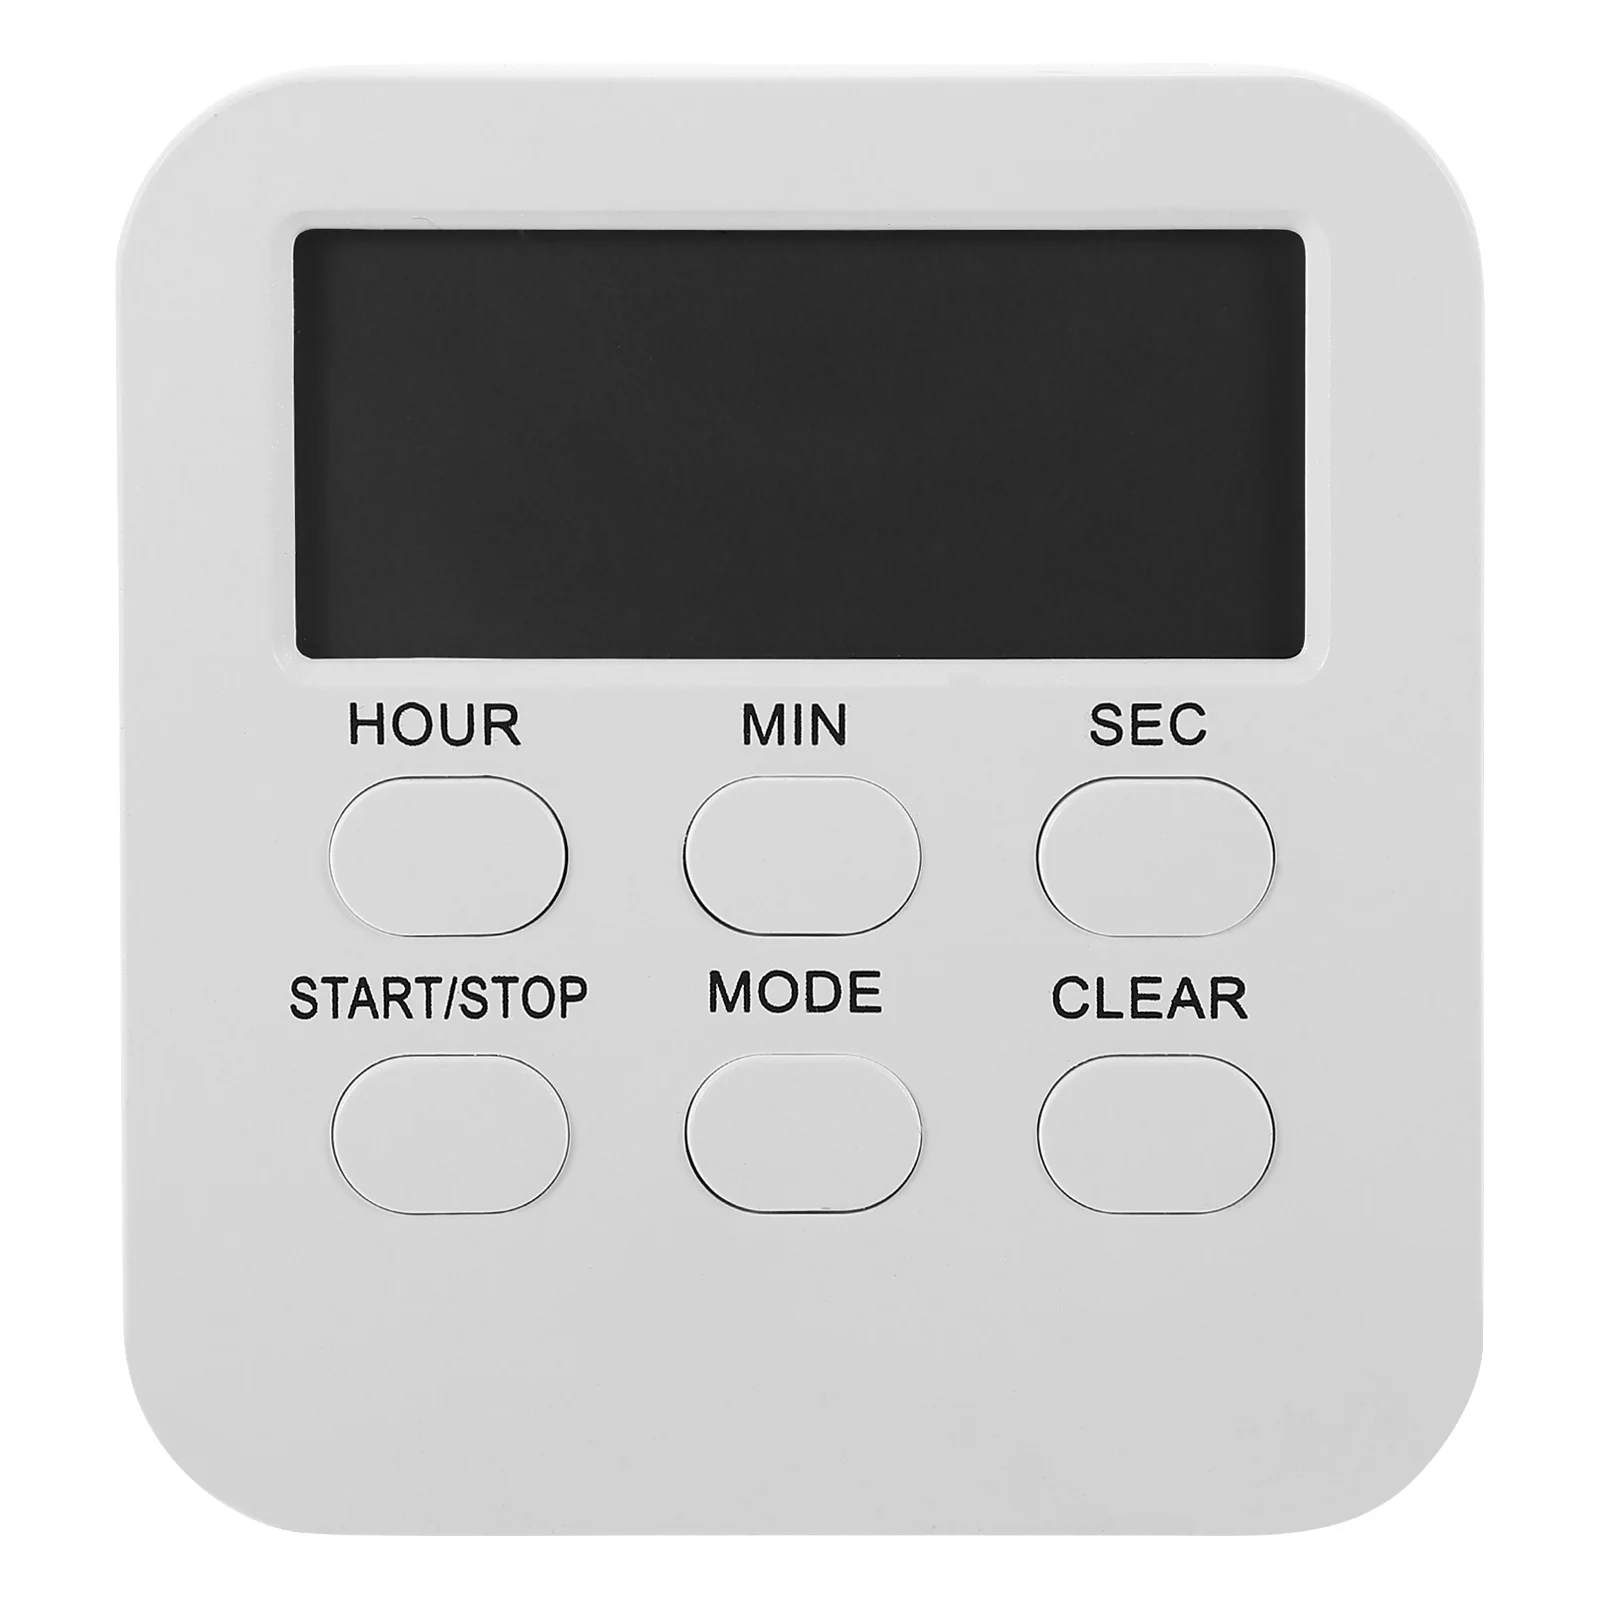 

Small Digital Display Timer Silent Timer Kitchen Cooking Desk Timer for Housewives